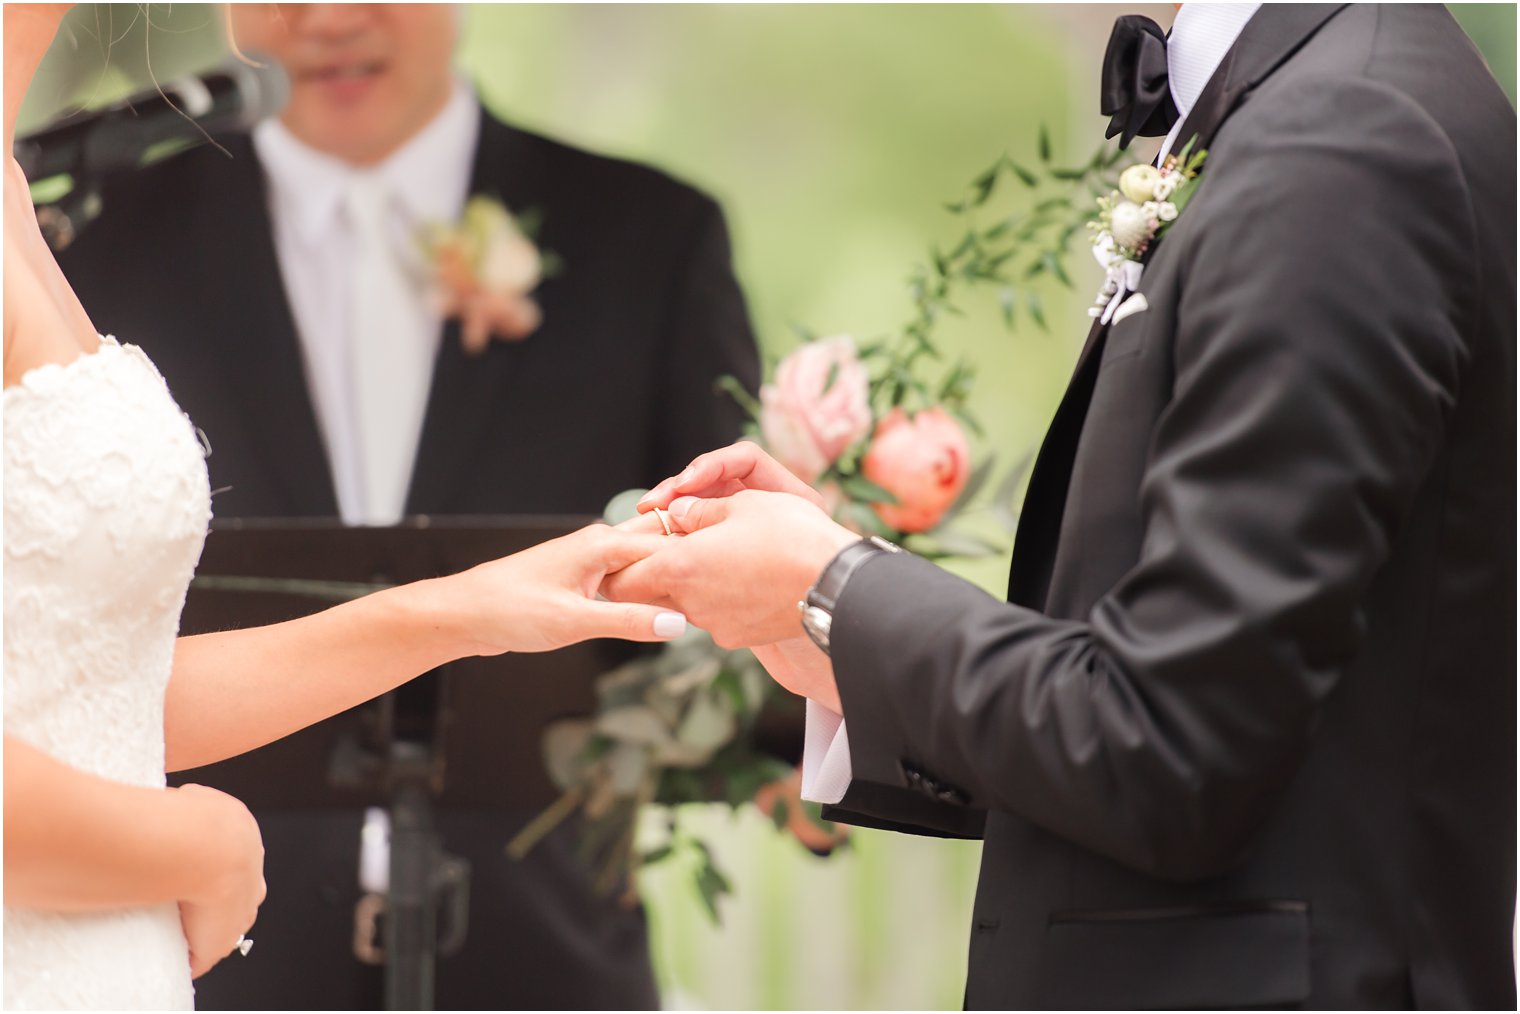 exchange of rings photographed by New Jersey wedding photographer Idalia Photography